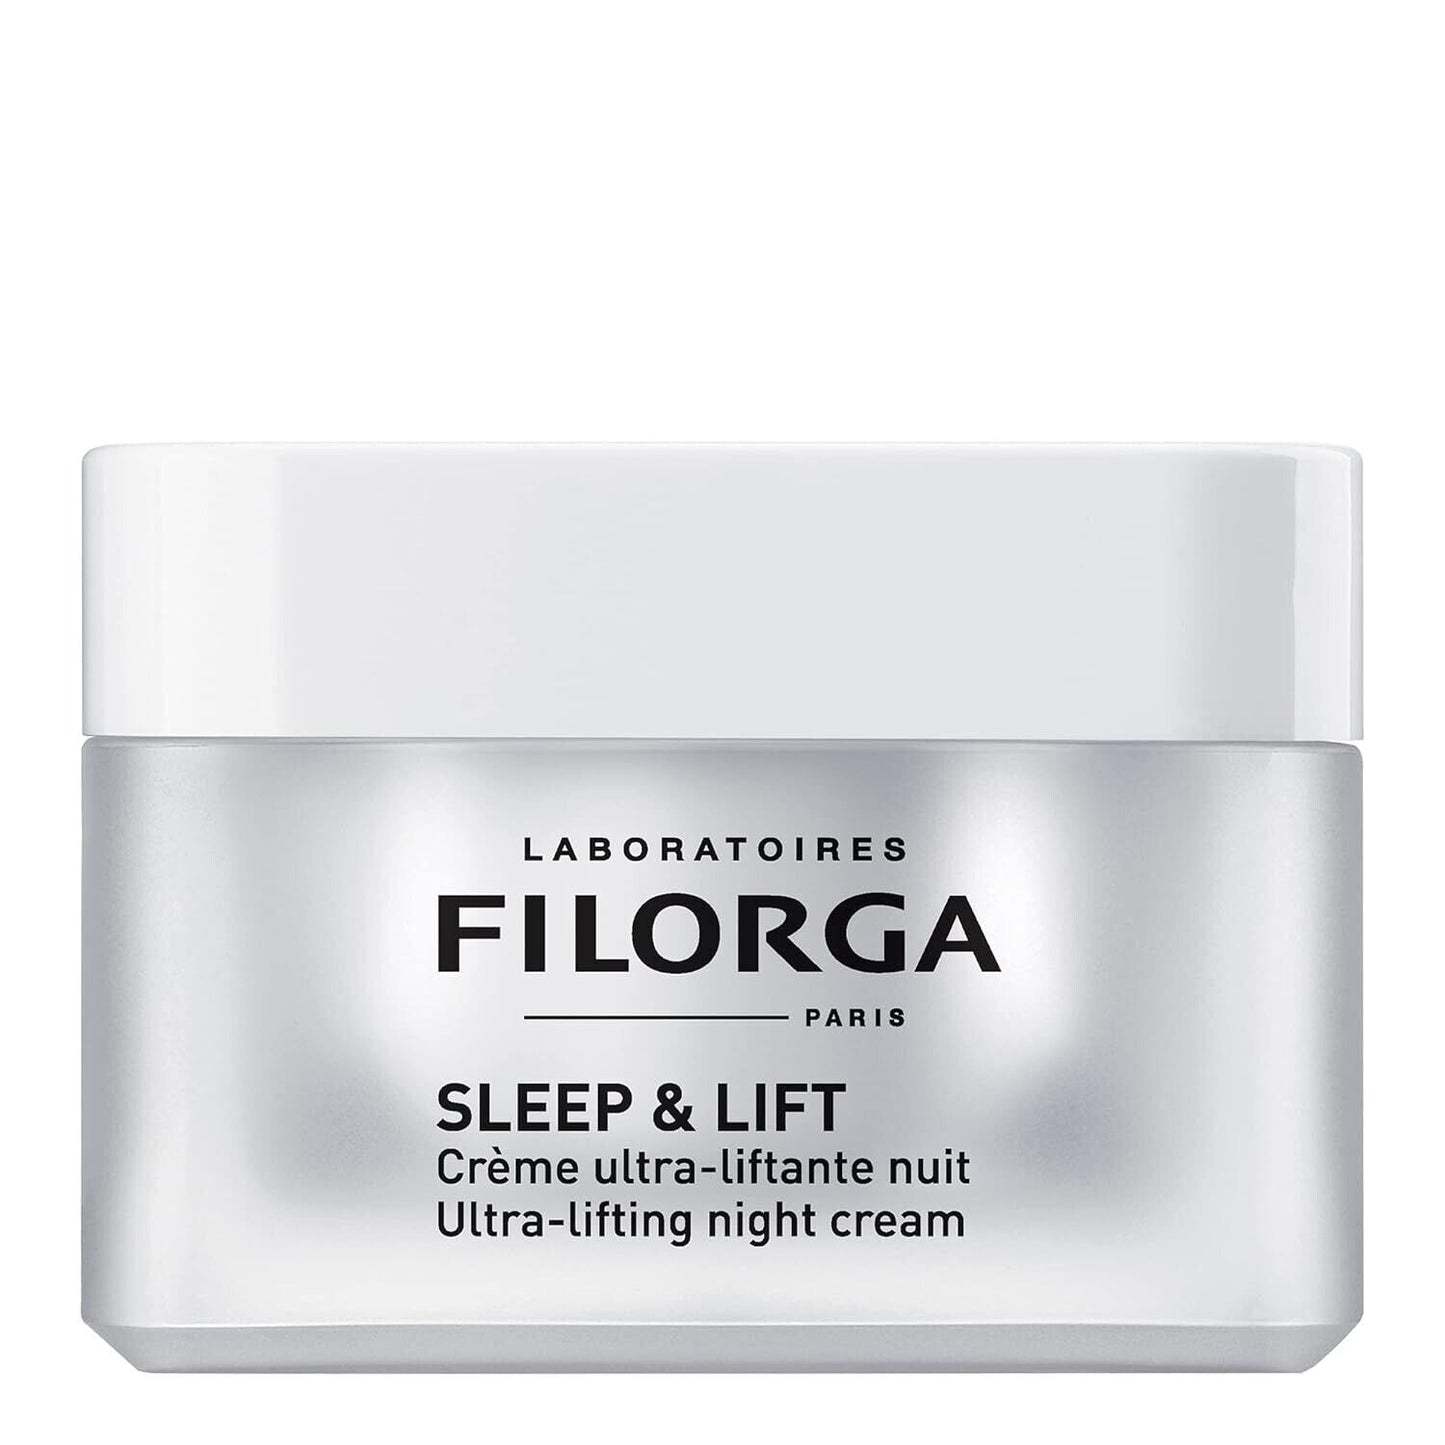 NEW SEALED Filorga Sleep & Lift Ultra-Lifting Night Cream 50ml Age defying